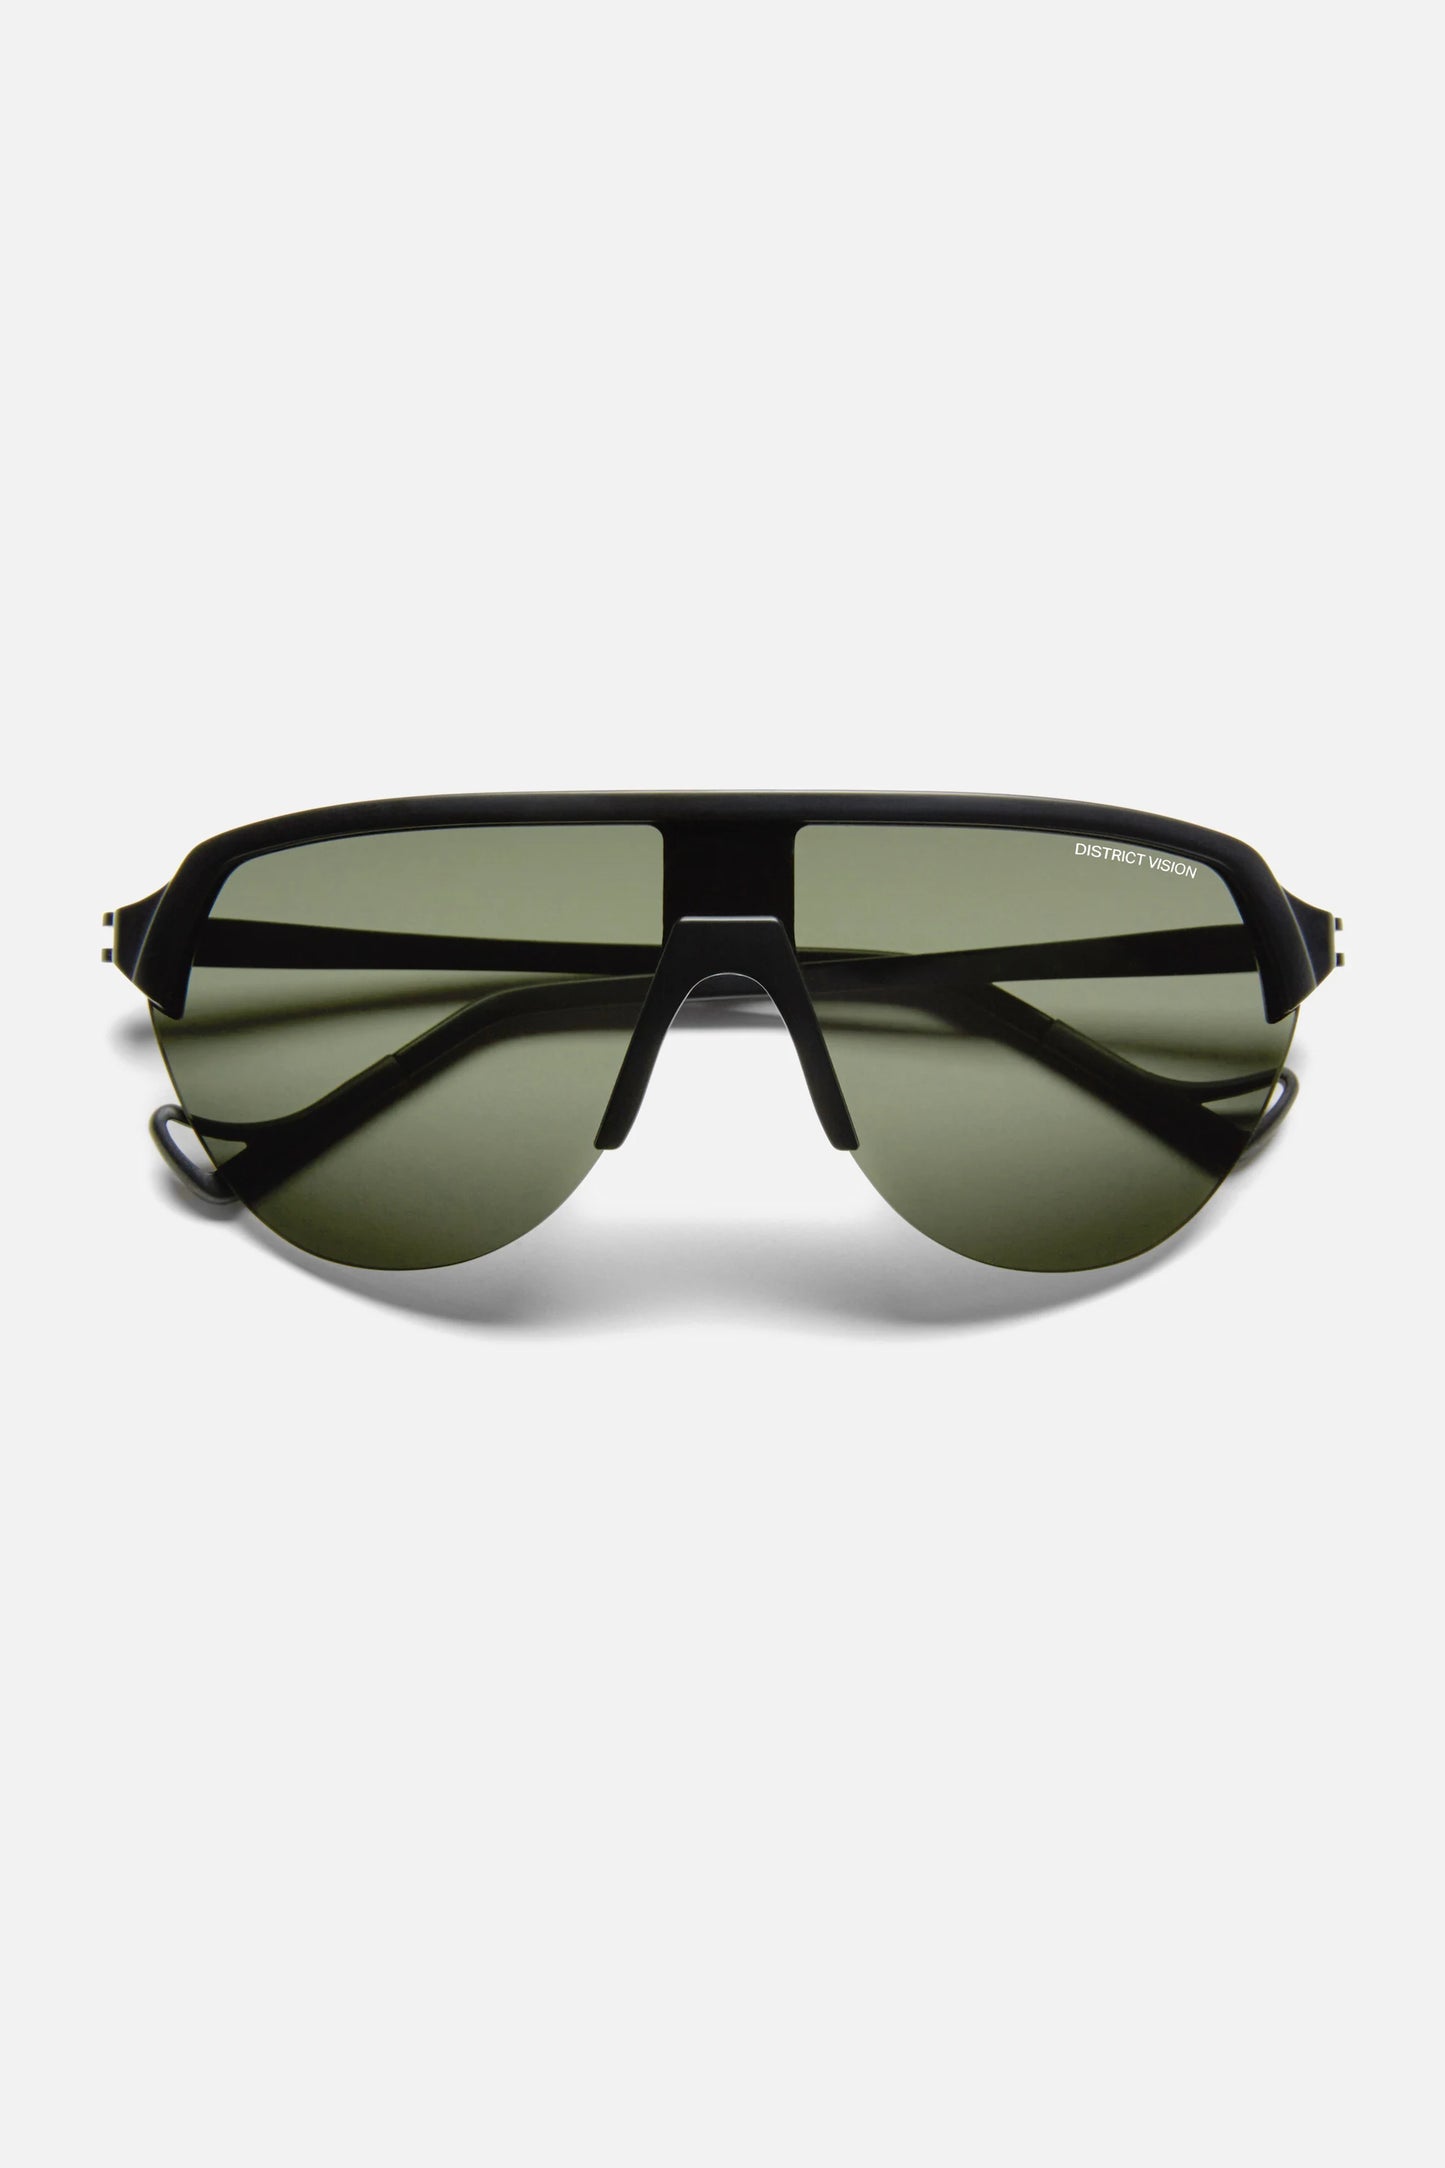 District Vision Nagata Speed Blade Sunglasses in Black